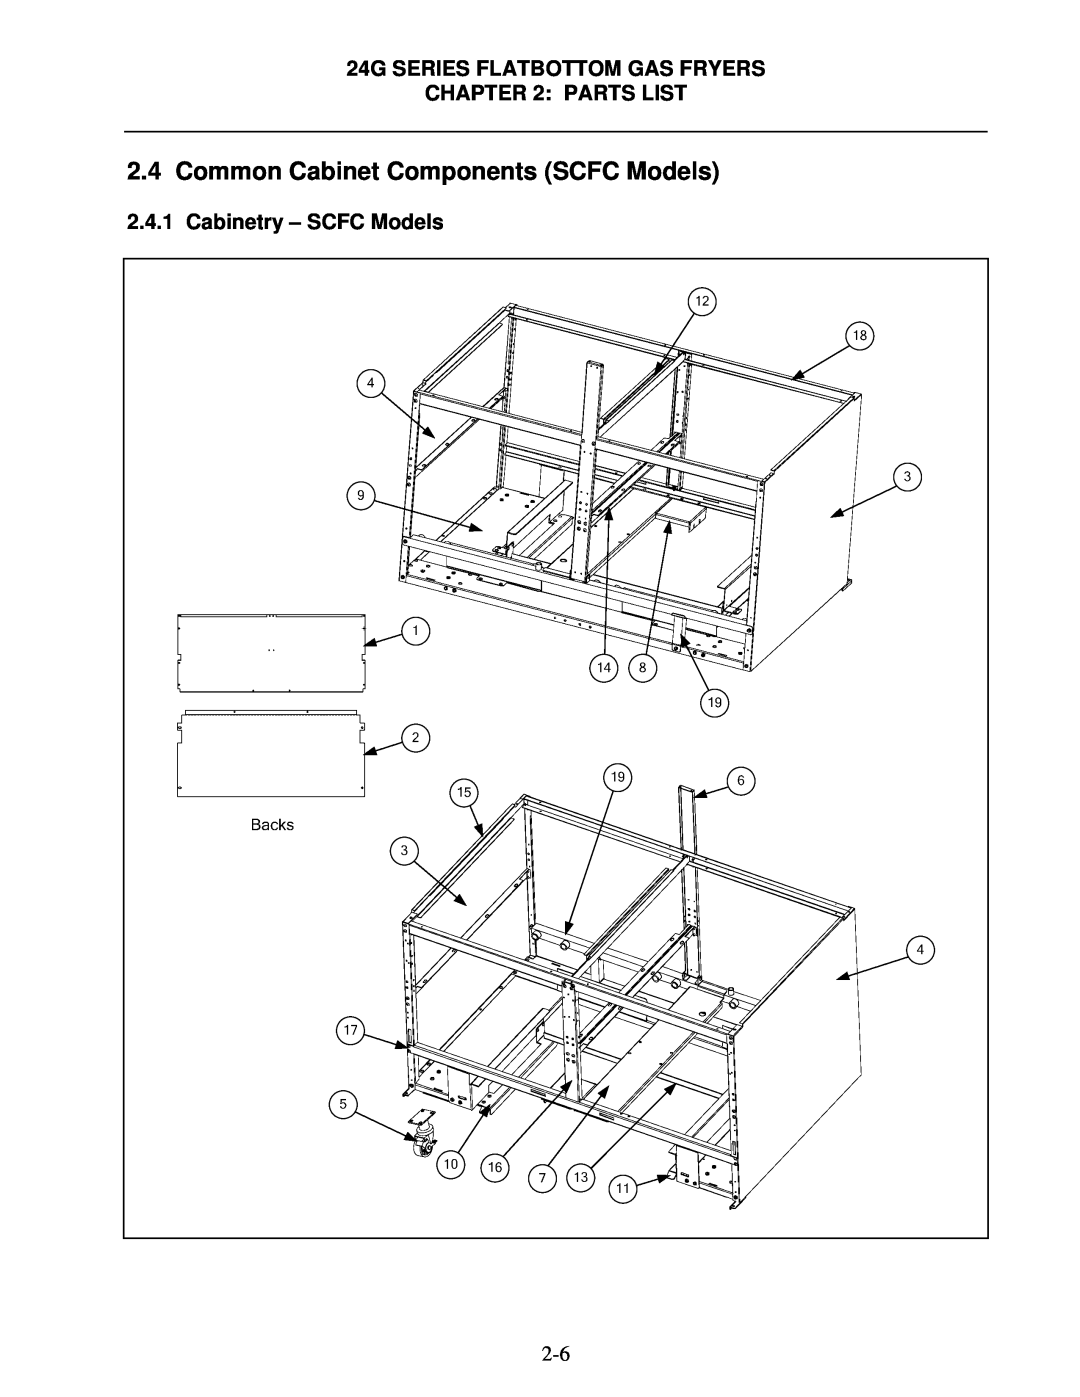 Frymaster 1824/2424G manual Common Cabinet Components SCFC Models, Cabinetry - SCFC Models 